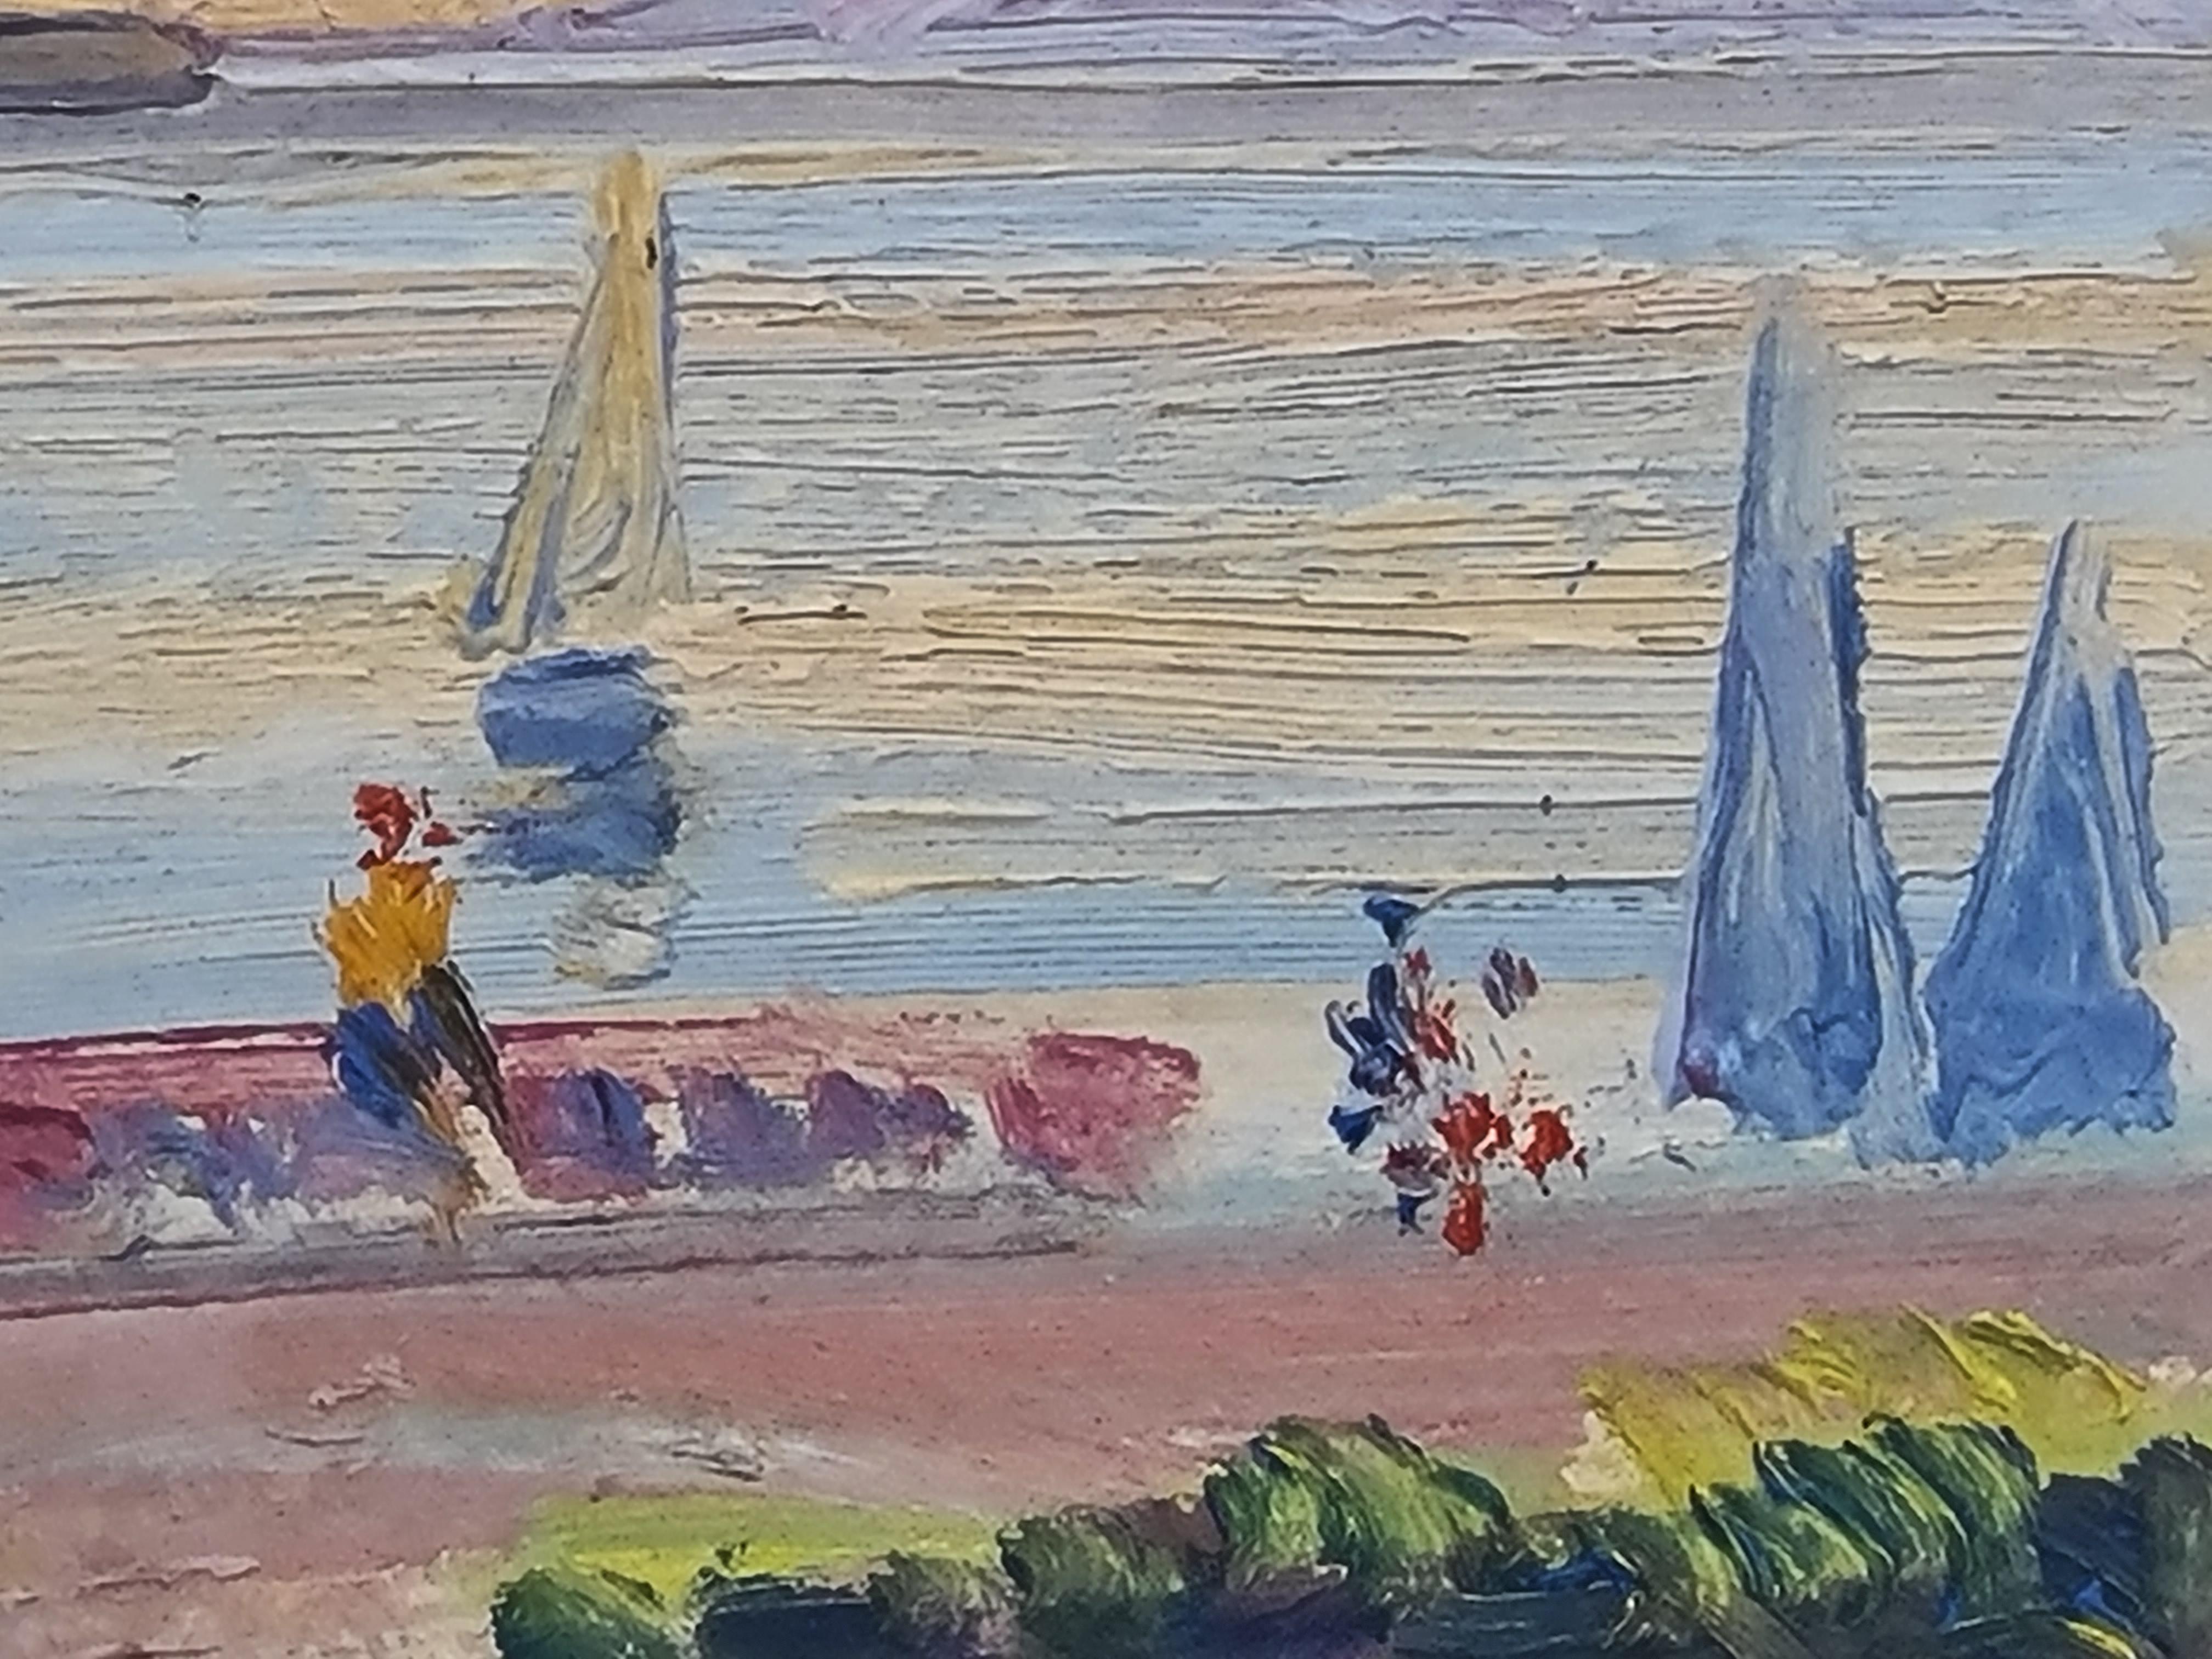 La Croisette, Cannes, French Oil on Board Seascape - Impressionist Painting by Robert Auguste Jaeger aka Le Veneur